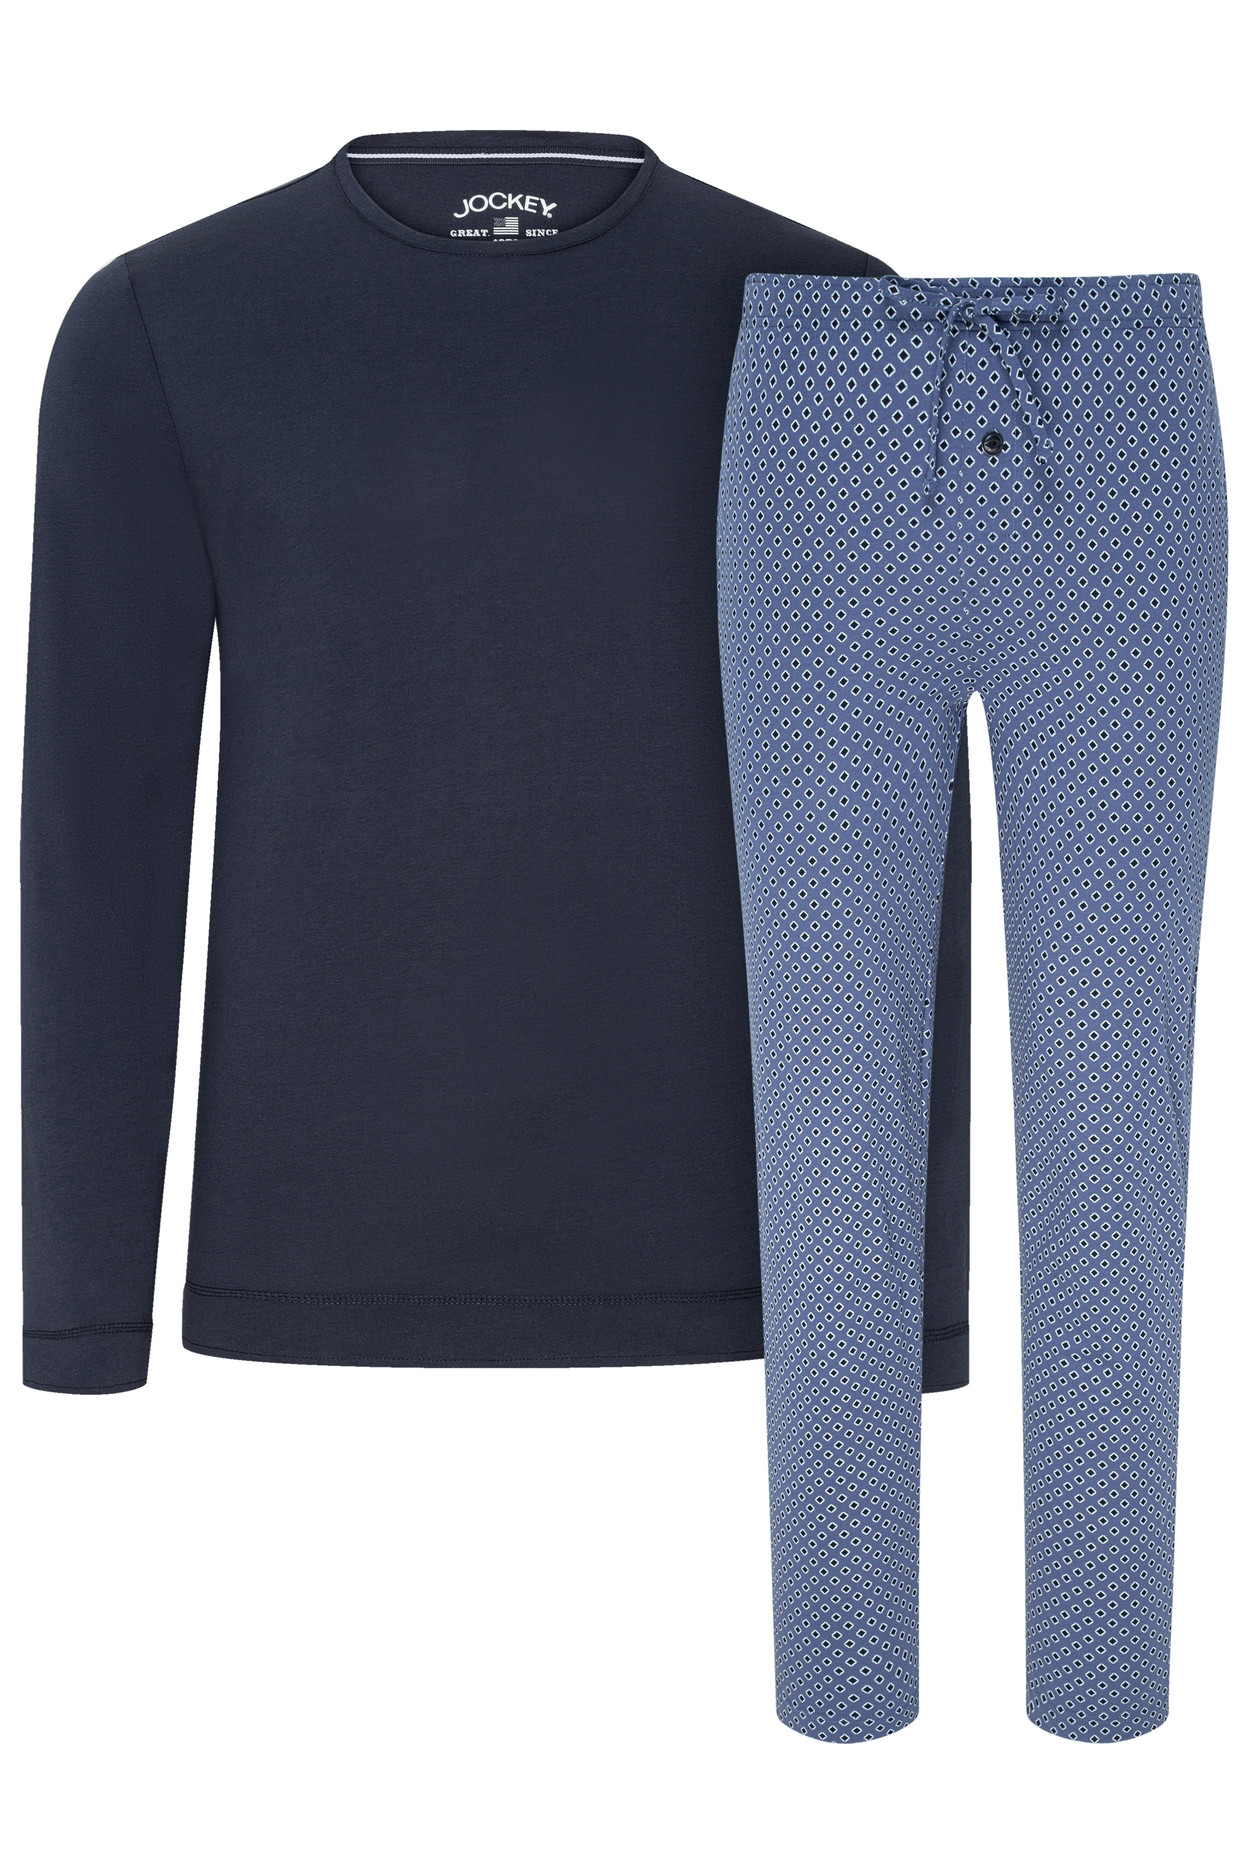 Pánské pyžamo 500002-407 - Jockey tmavě modrá M